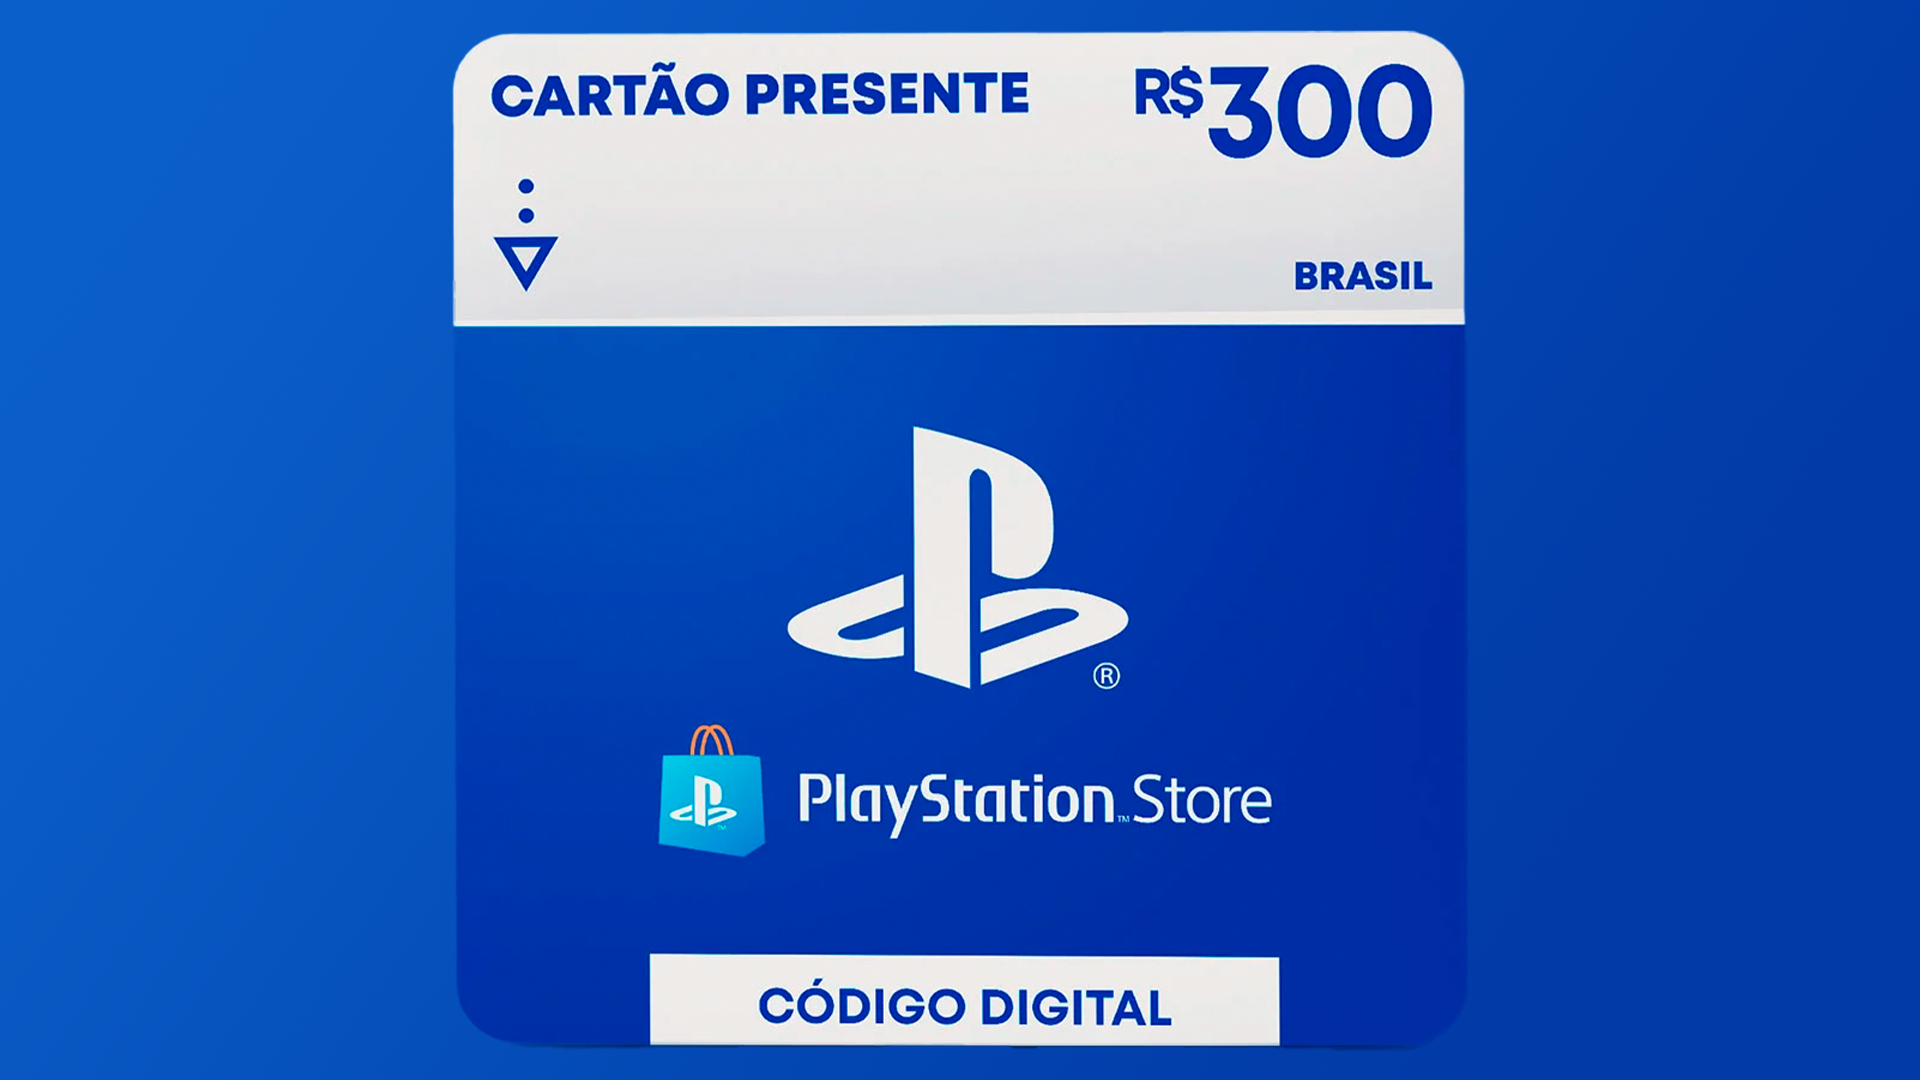 R$300 PlayStation Store - Cartão Presente Digital [Exclusivo Brasil]